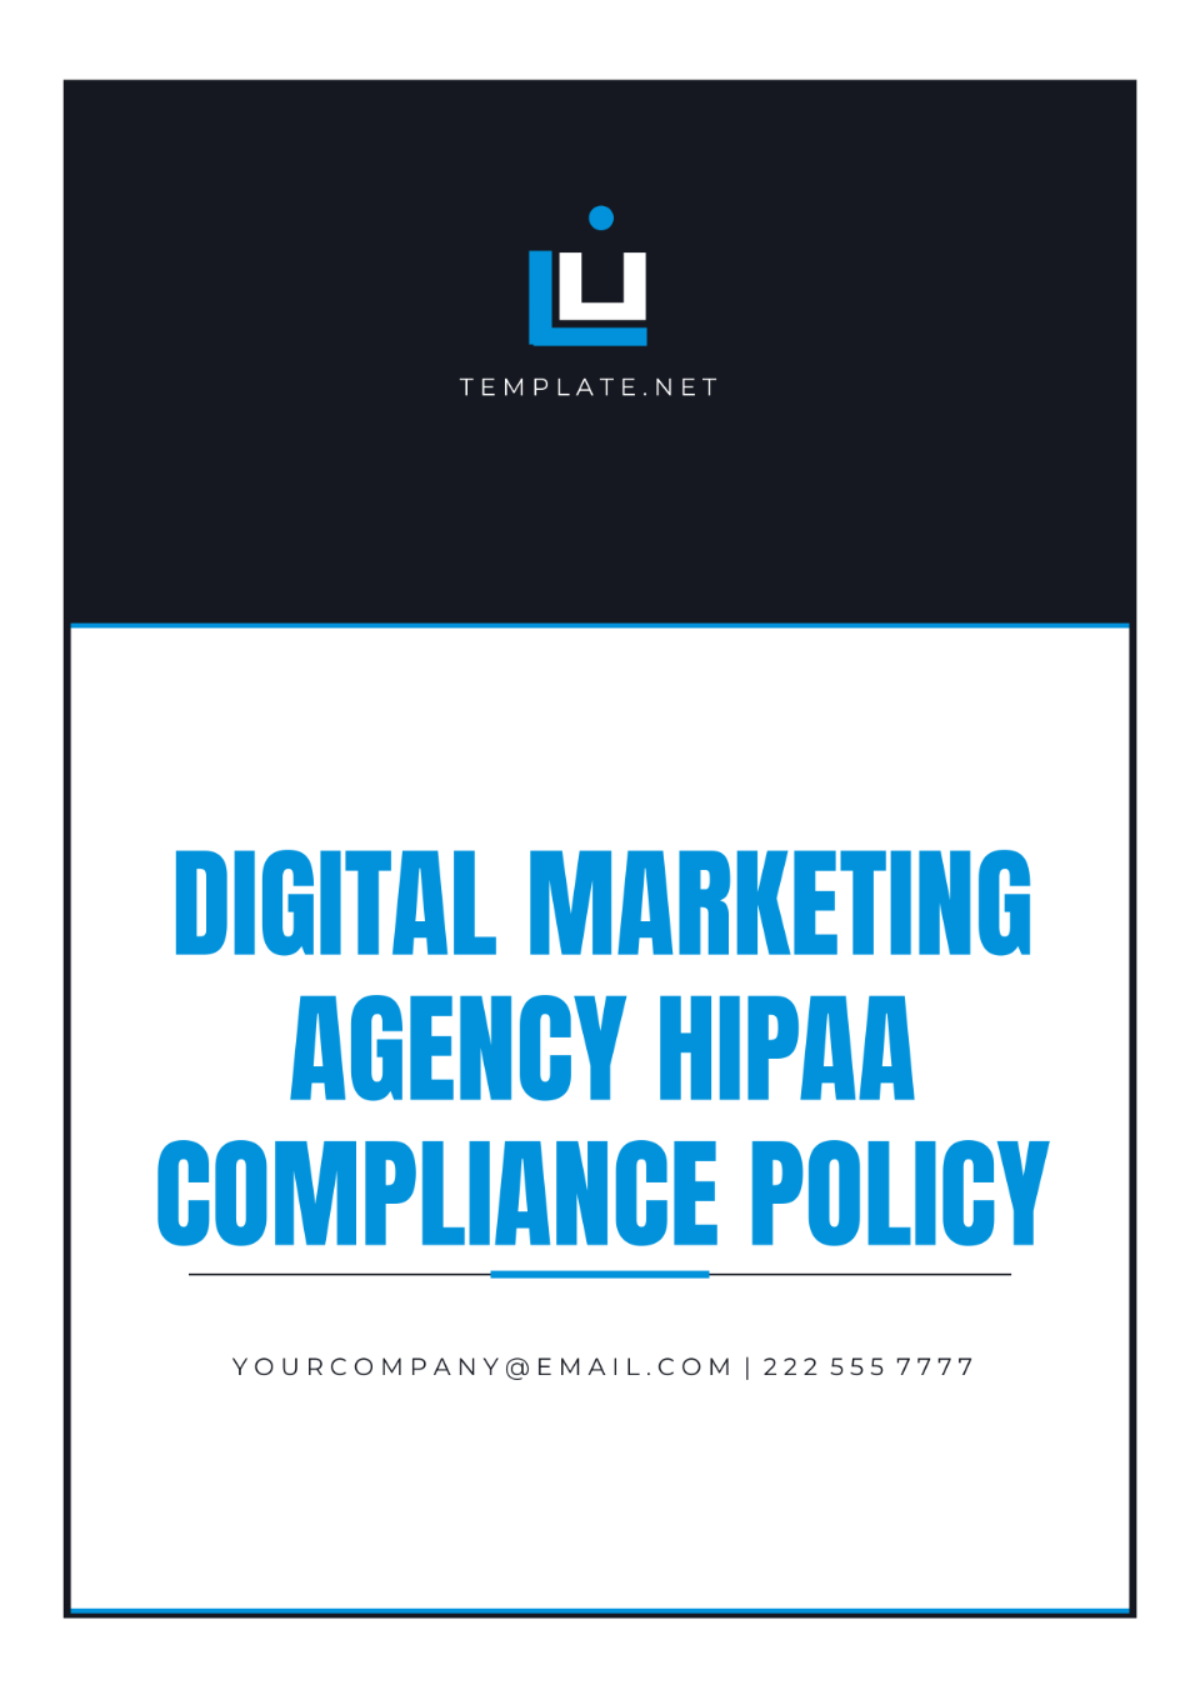 Digital Marketing Agency HIPAA Compliance Policy Template